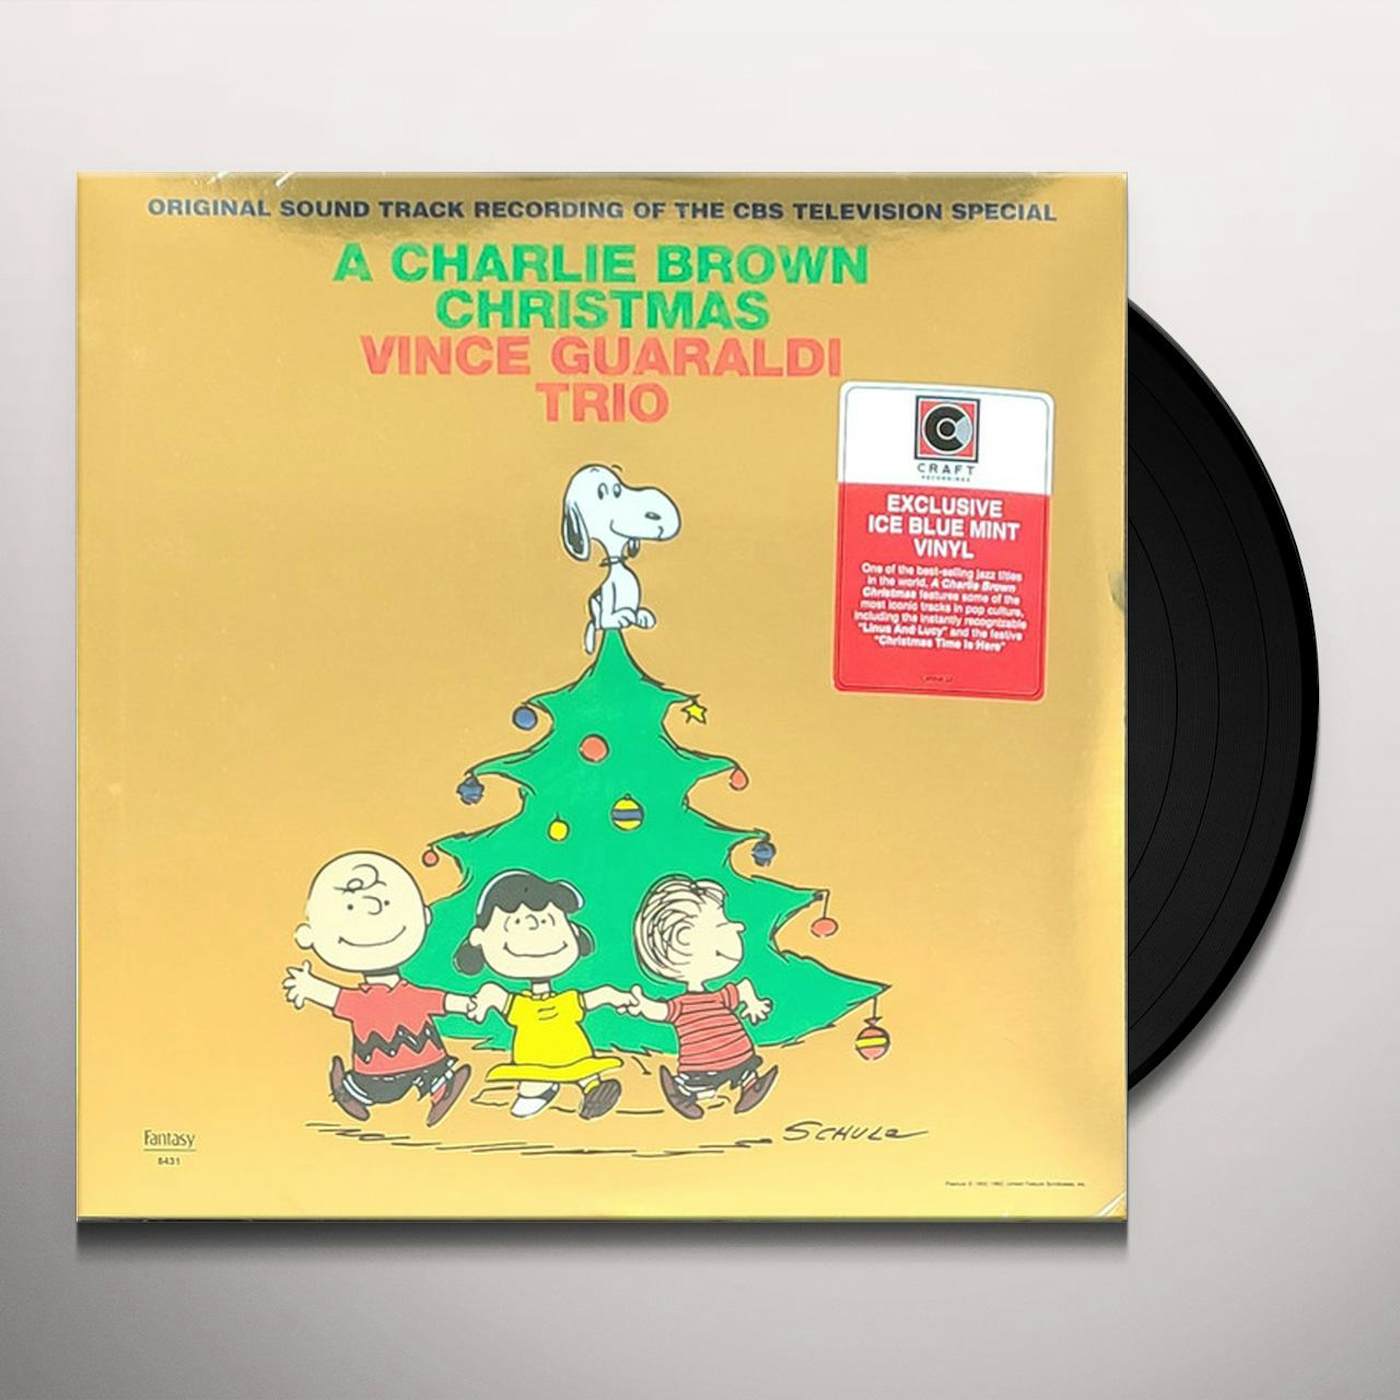 It's the Great Pumpkin, Charlie Brown [Original TV Soundtrack] by Vince  Guaraldi, Vinyl LP